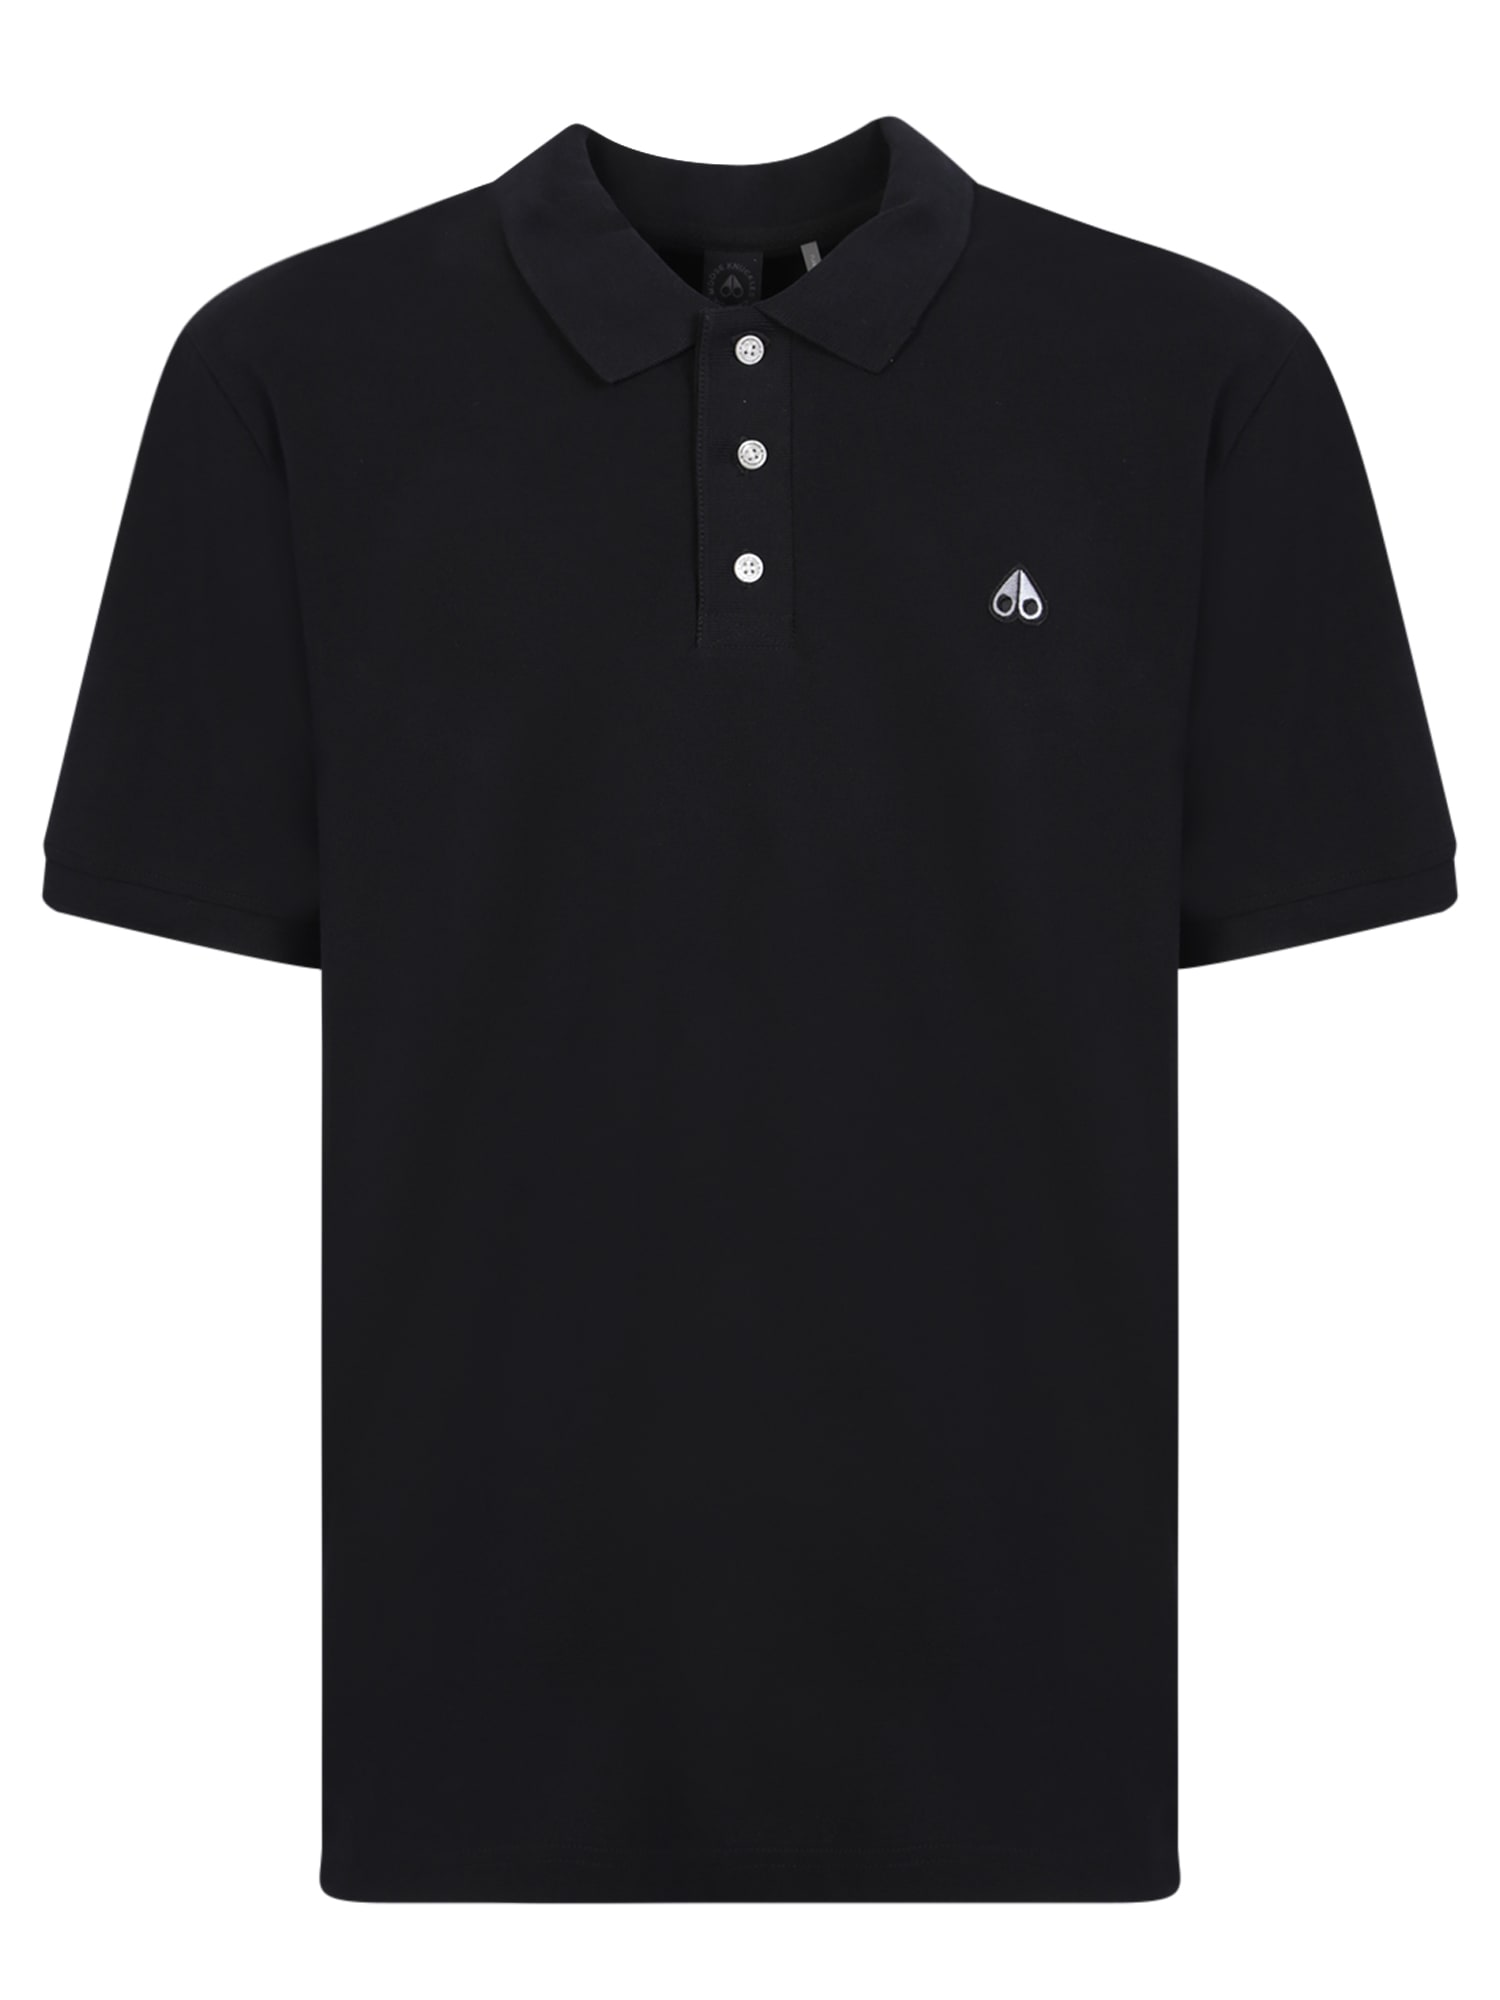 Shop Moose Knuckles Black Polo Shirt